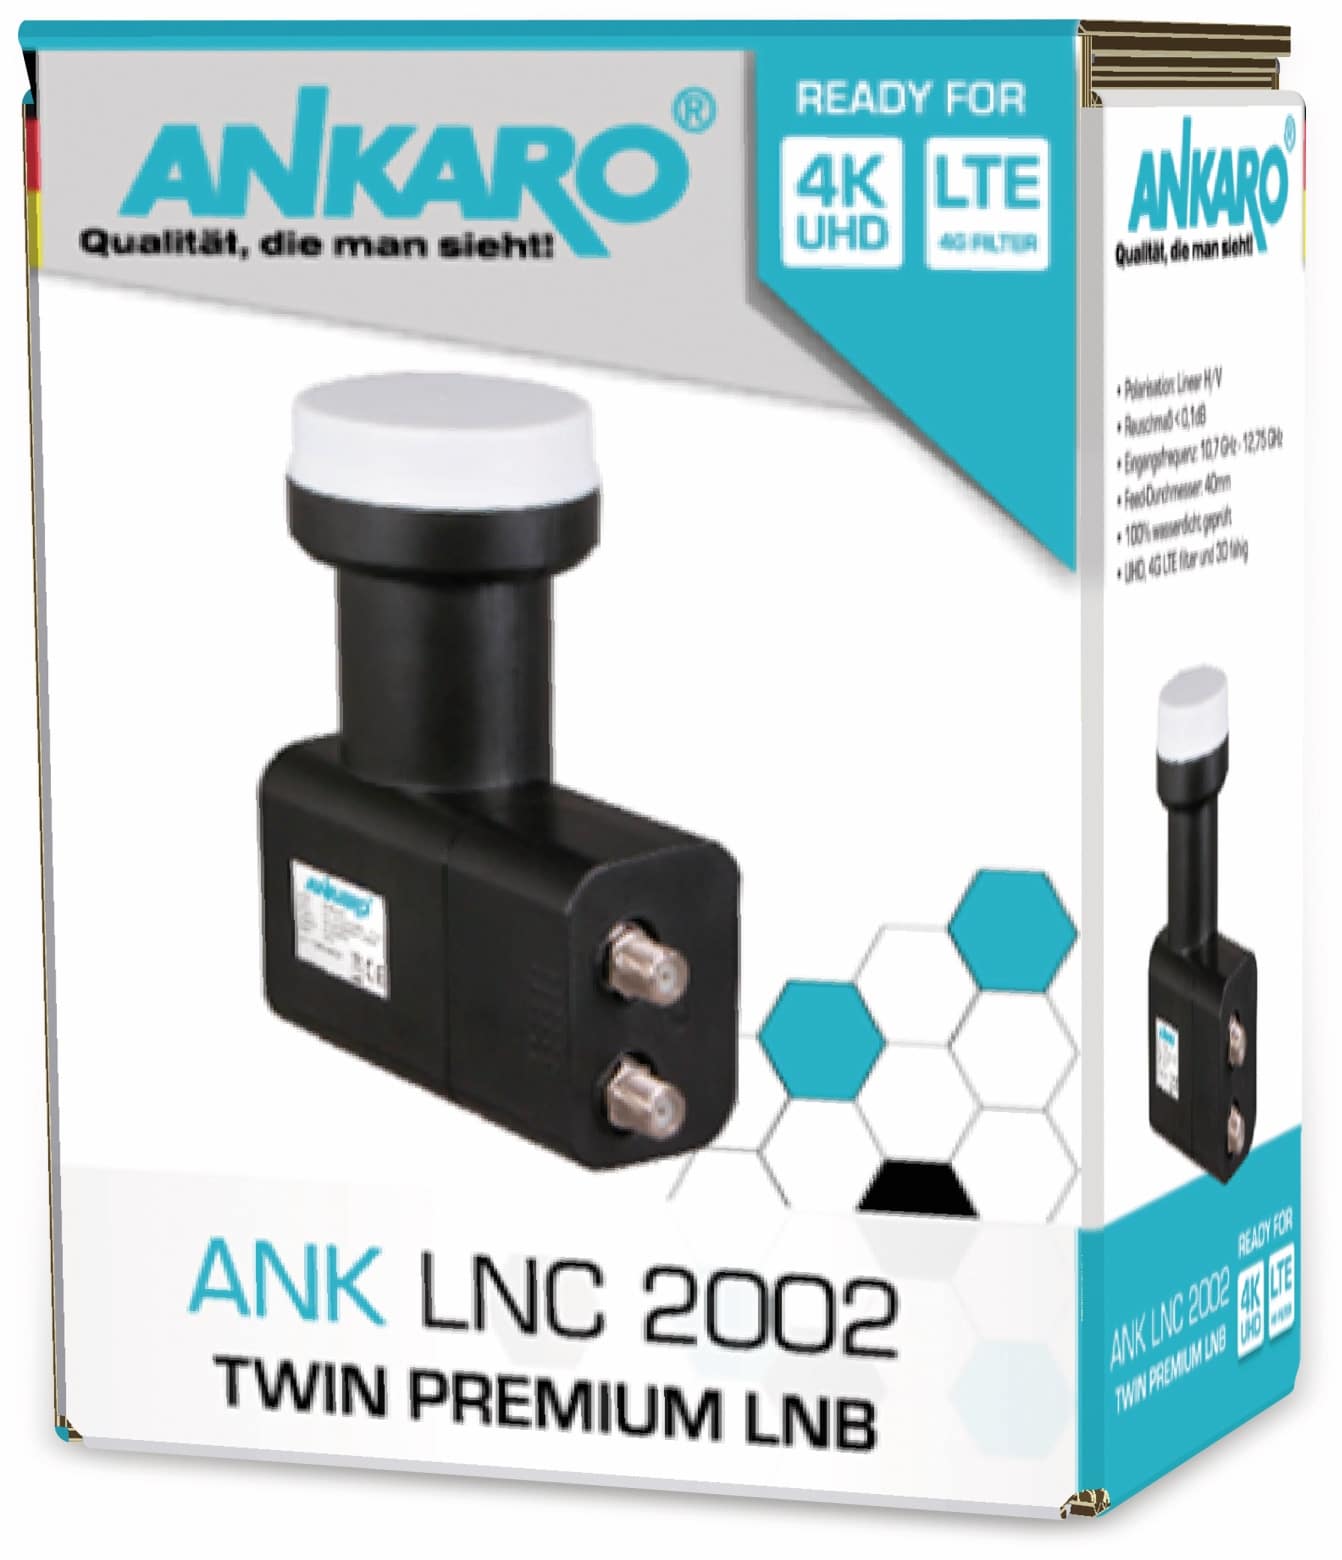 ANKARO Twin-LNB LNC 2002